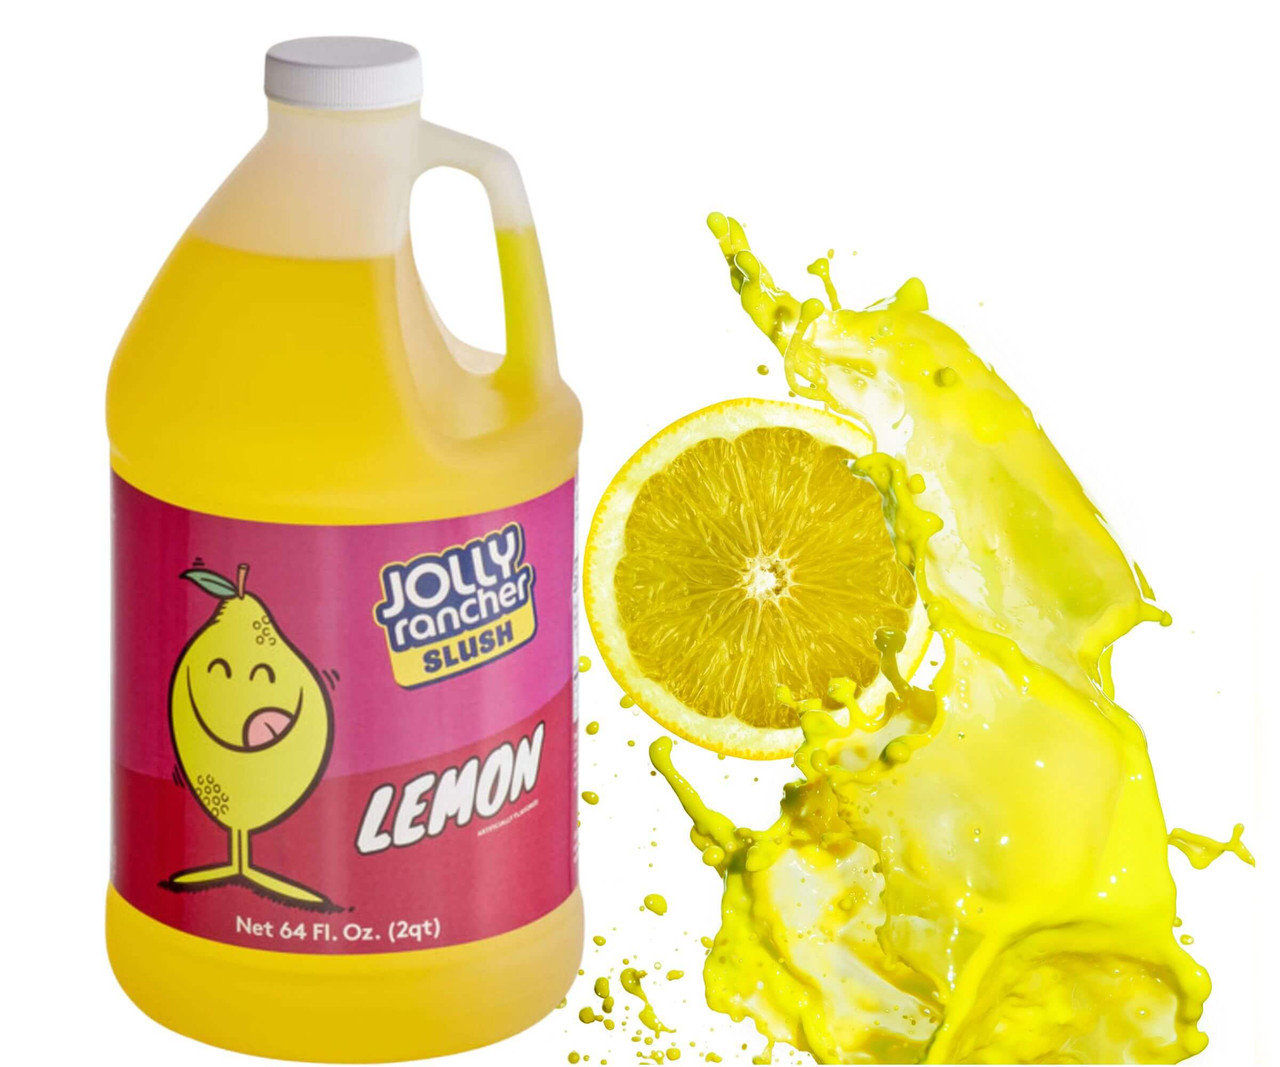 JOLLY RANCHER Jolly Rancher 1/2 Gallon Lemon Slushy 5:1 Concentrate